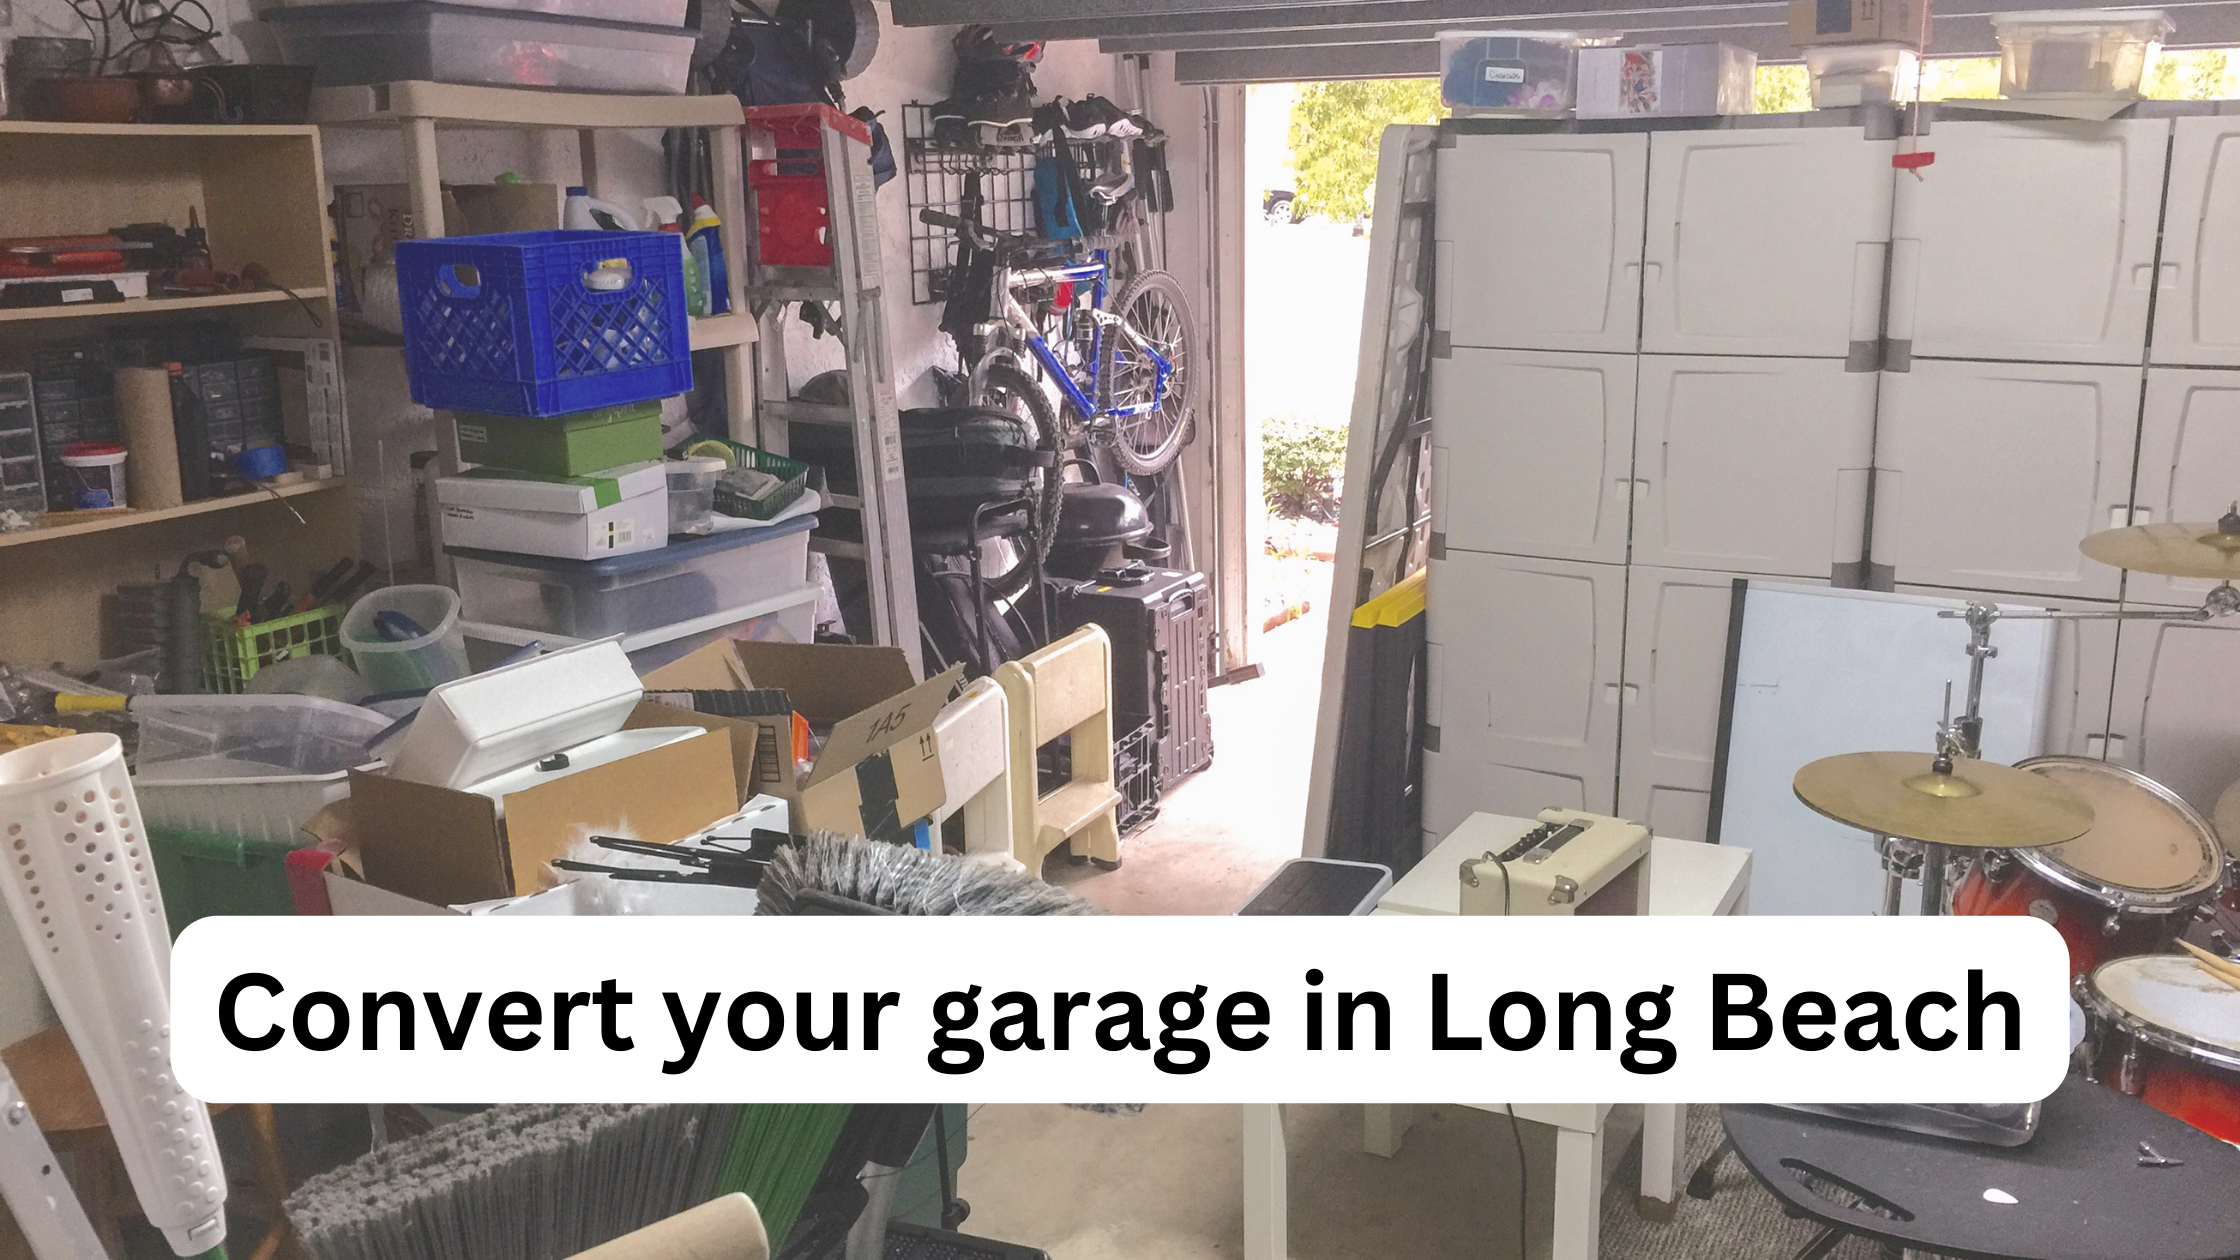 Garage conversion in Long Beach